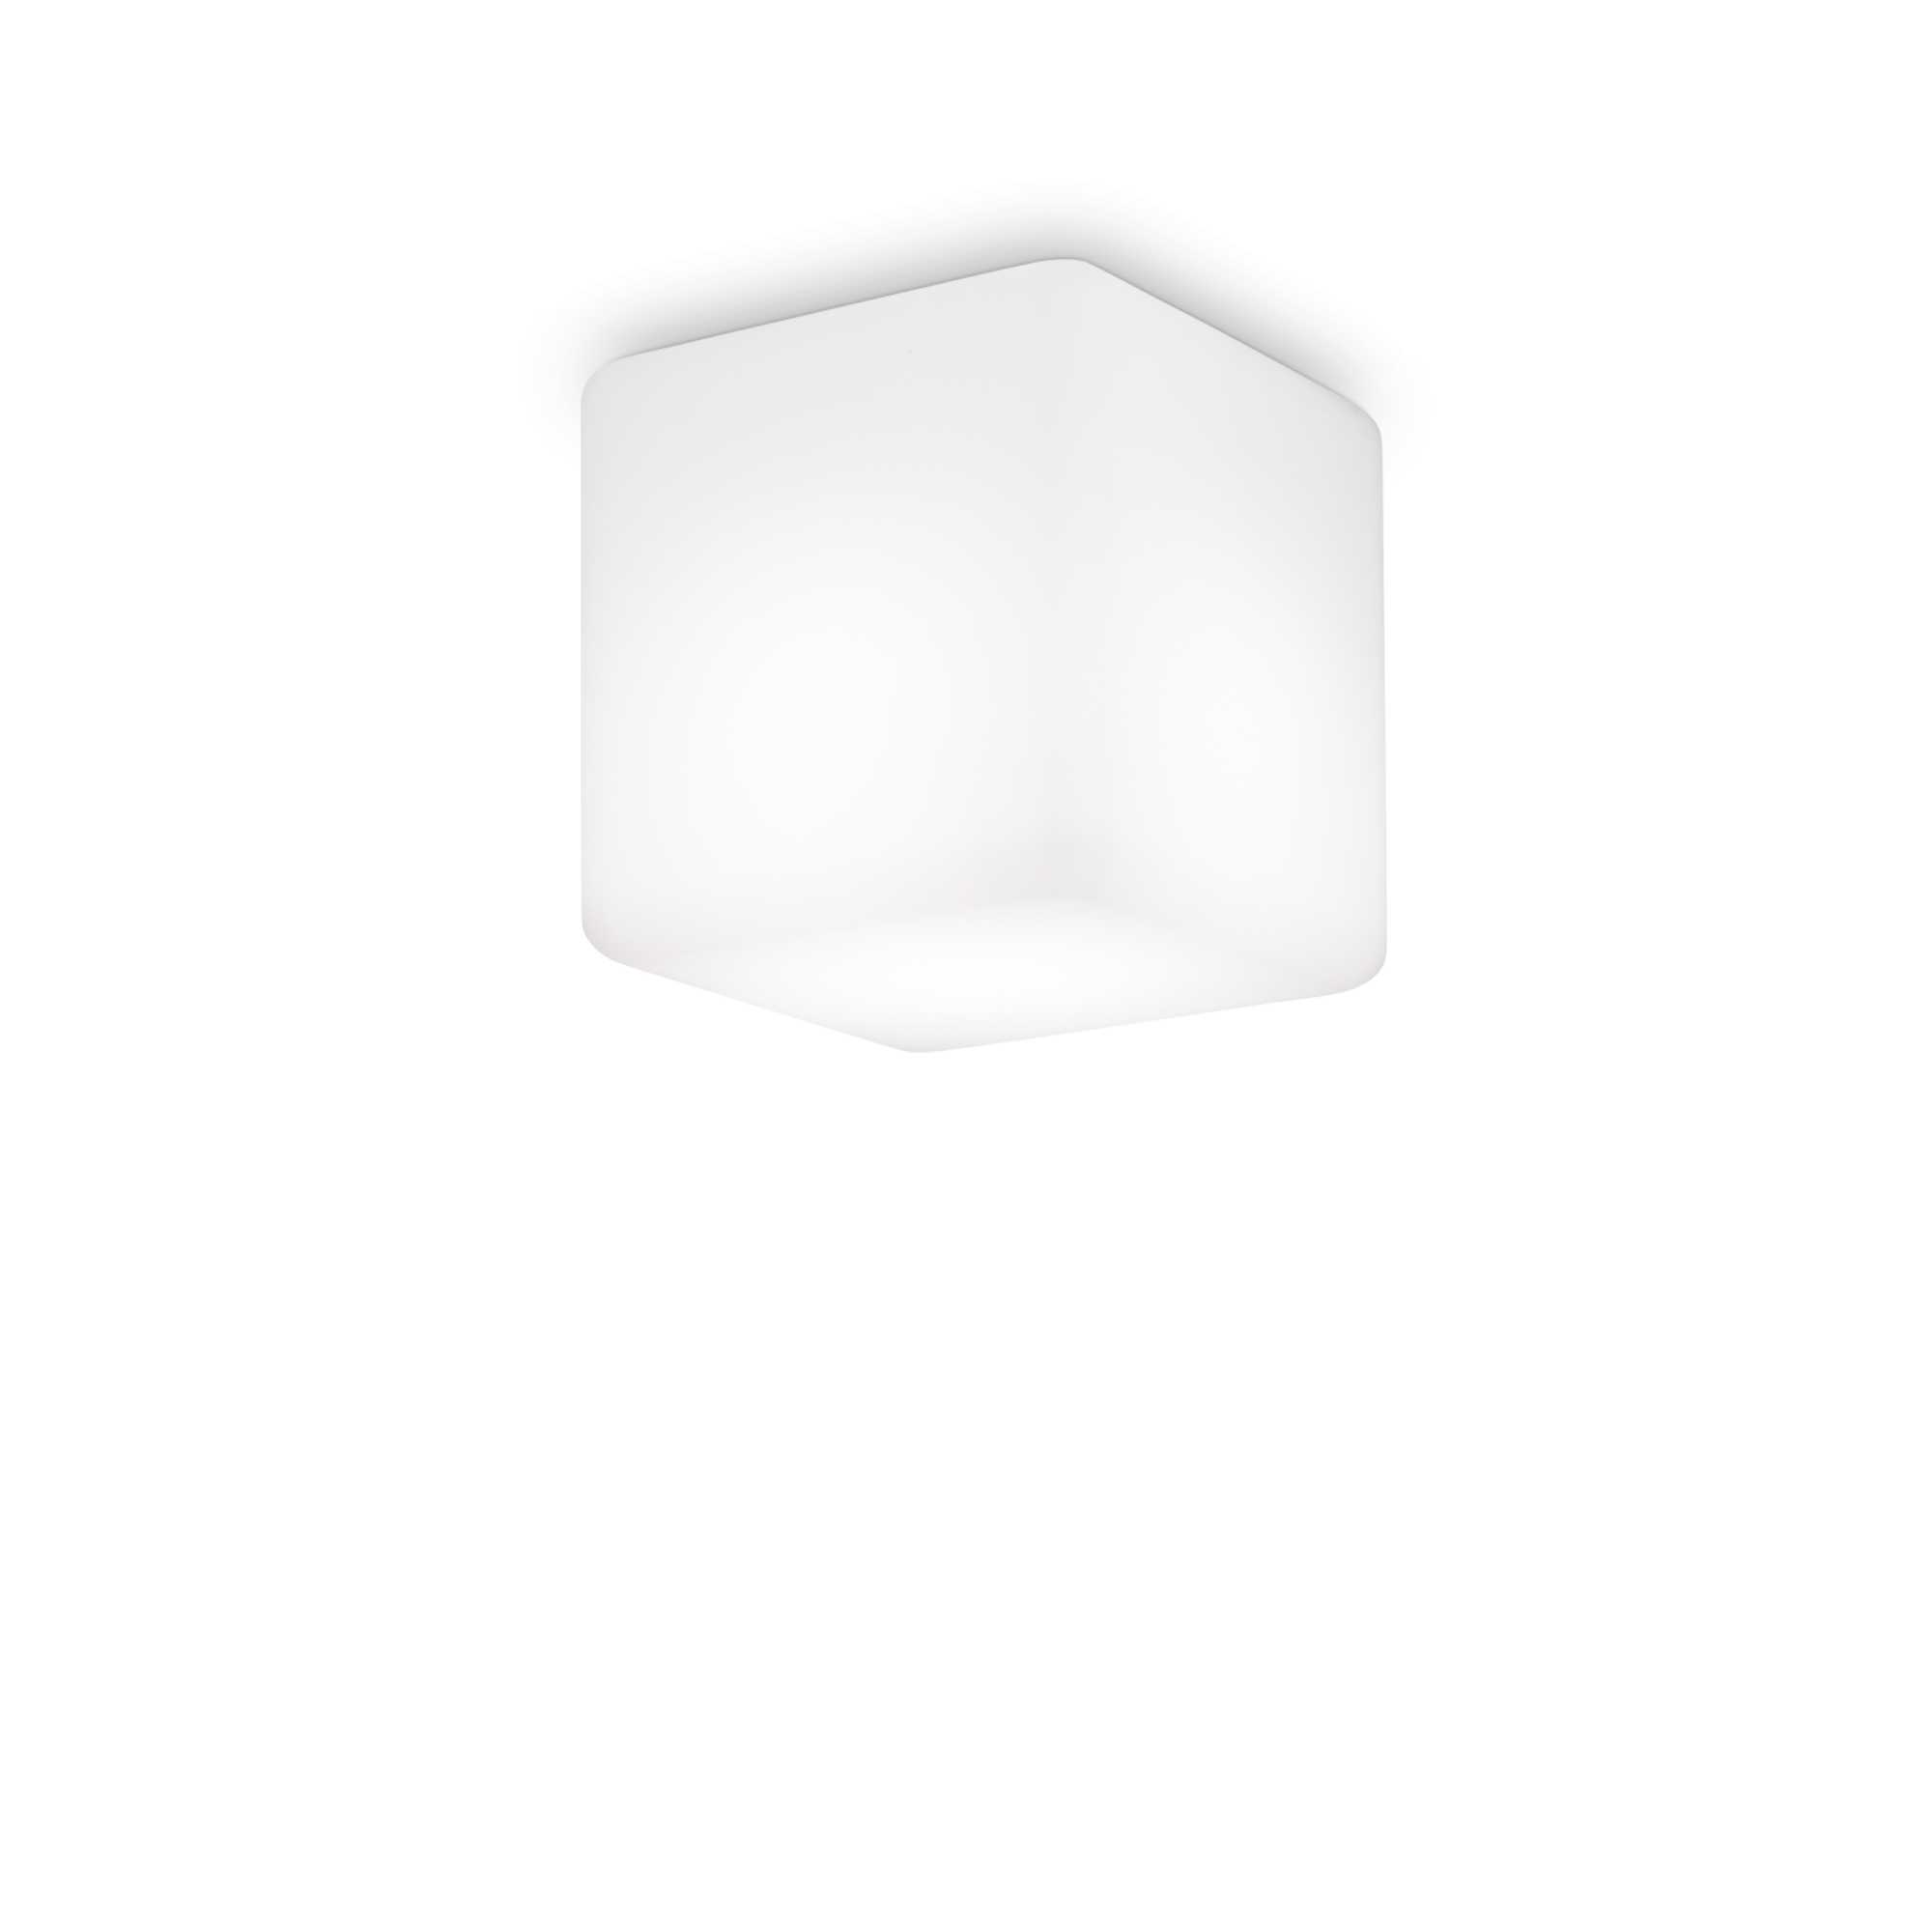 AD hotelska oprema Vanjska stropna lampa Luna pl1 d11 slika proizvoda